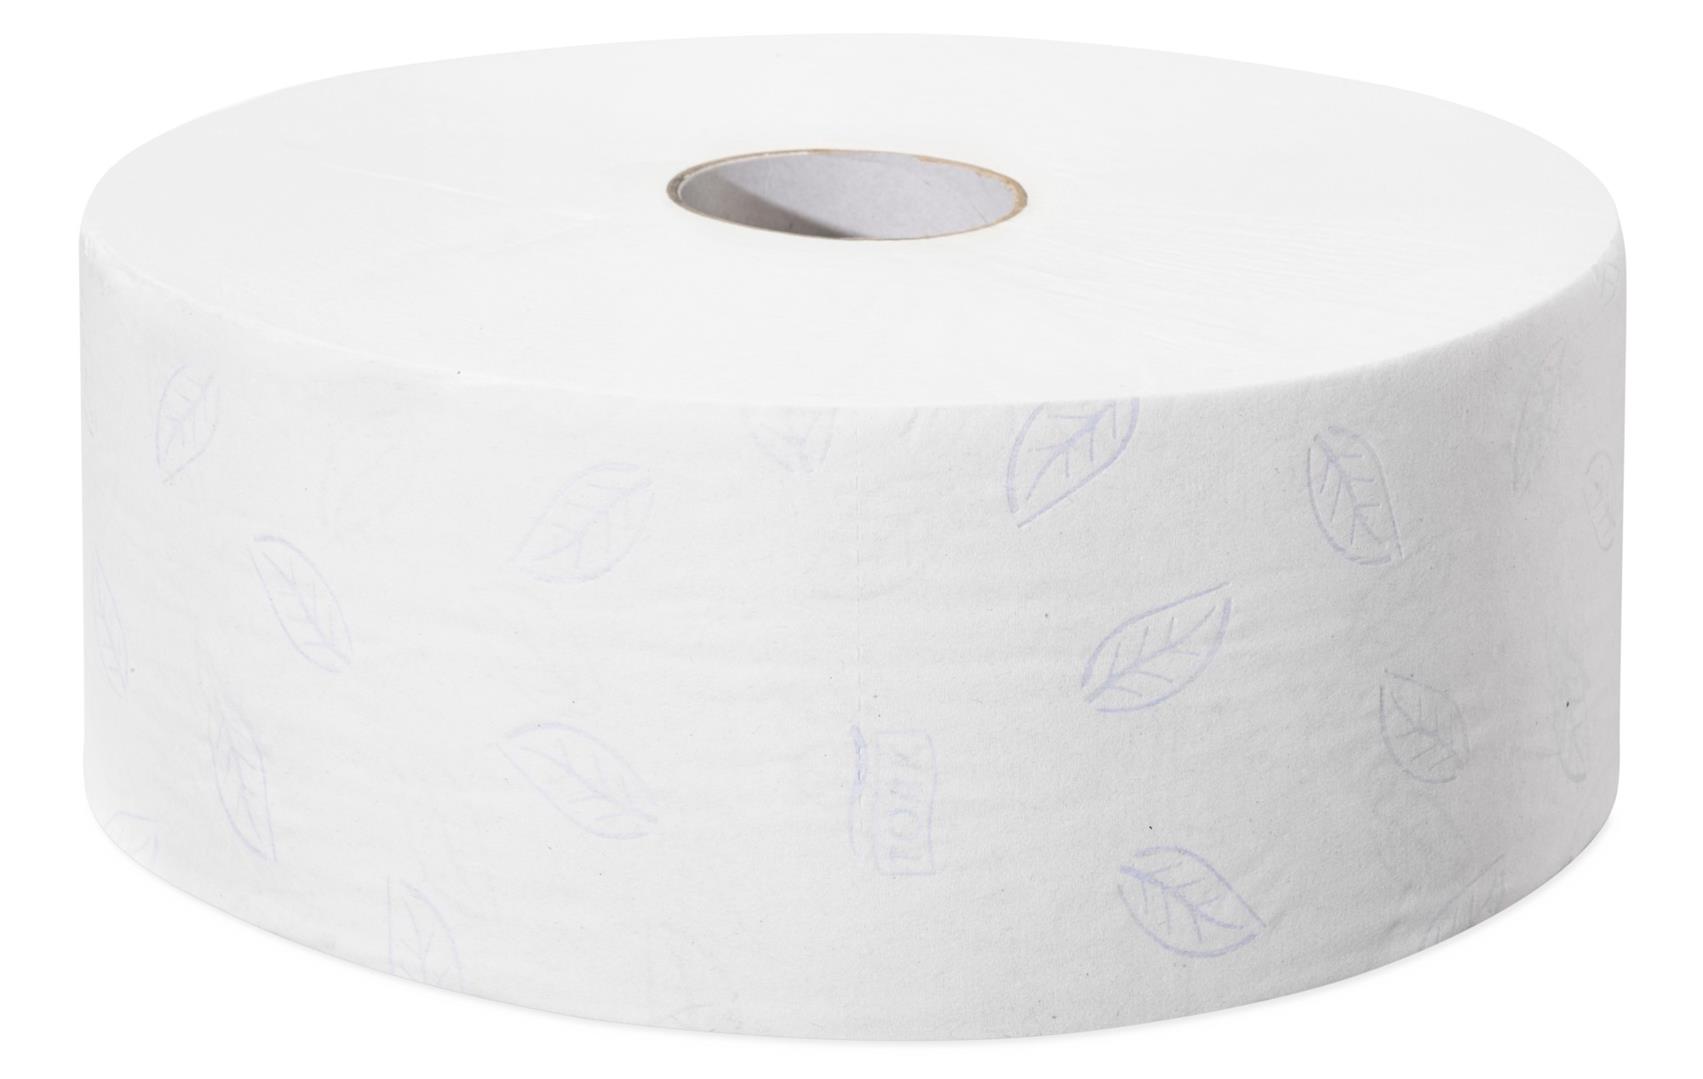 TORK-120272 Jumbo Toilettenpapier Advanced - T1